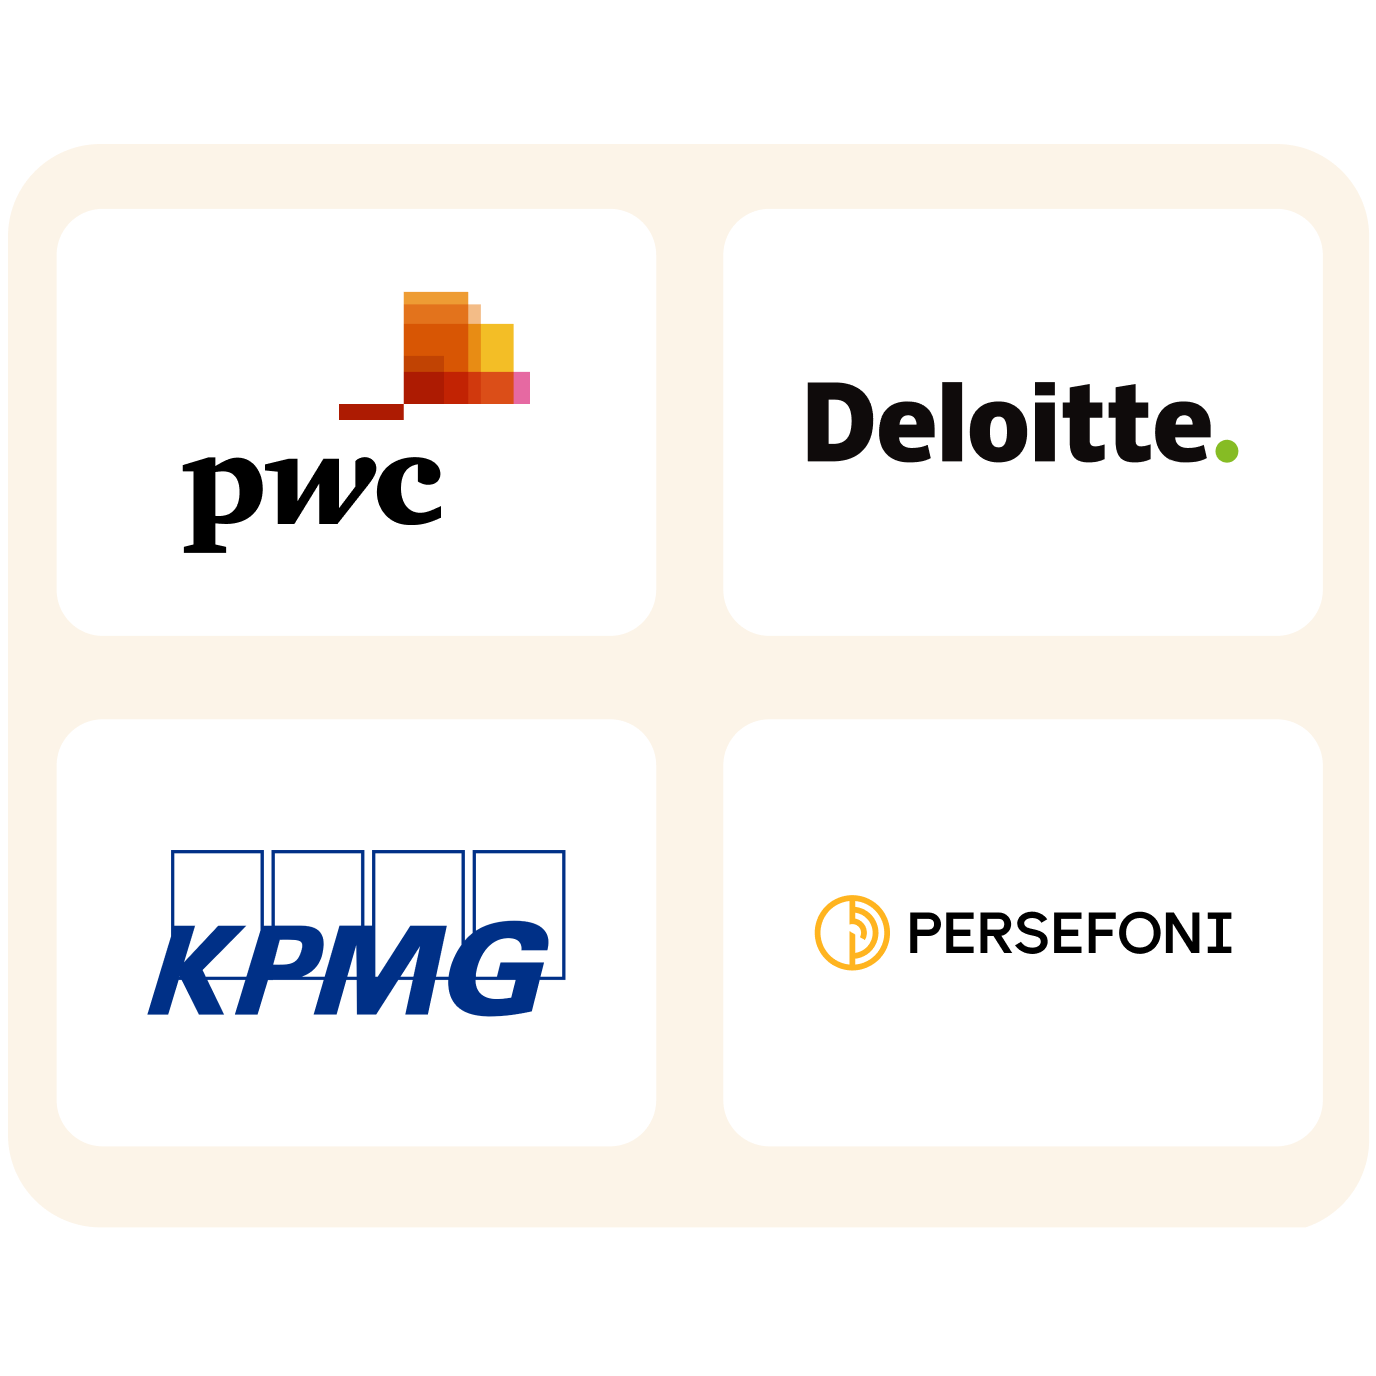 Grid of ESG parter logos featuring PwC, Deloitte, KPMG, Persefoni